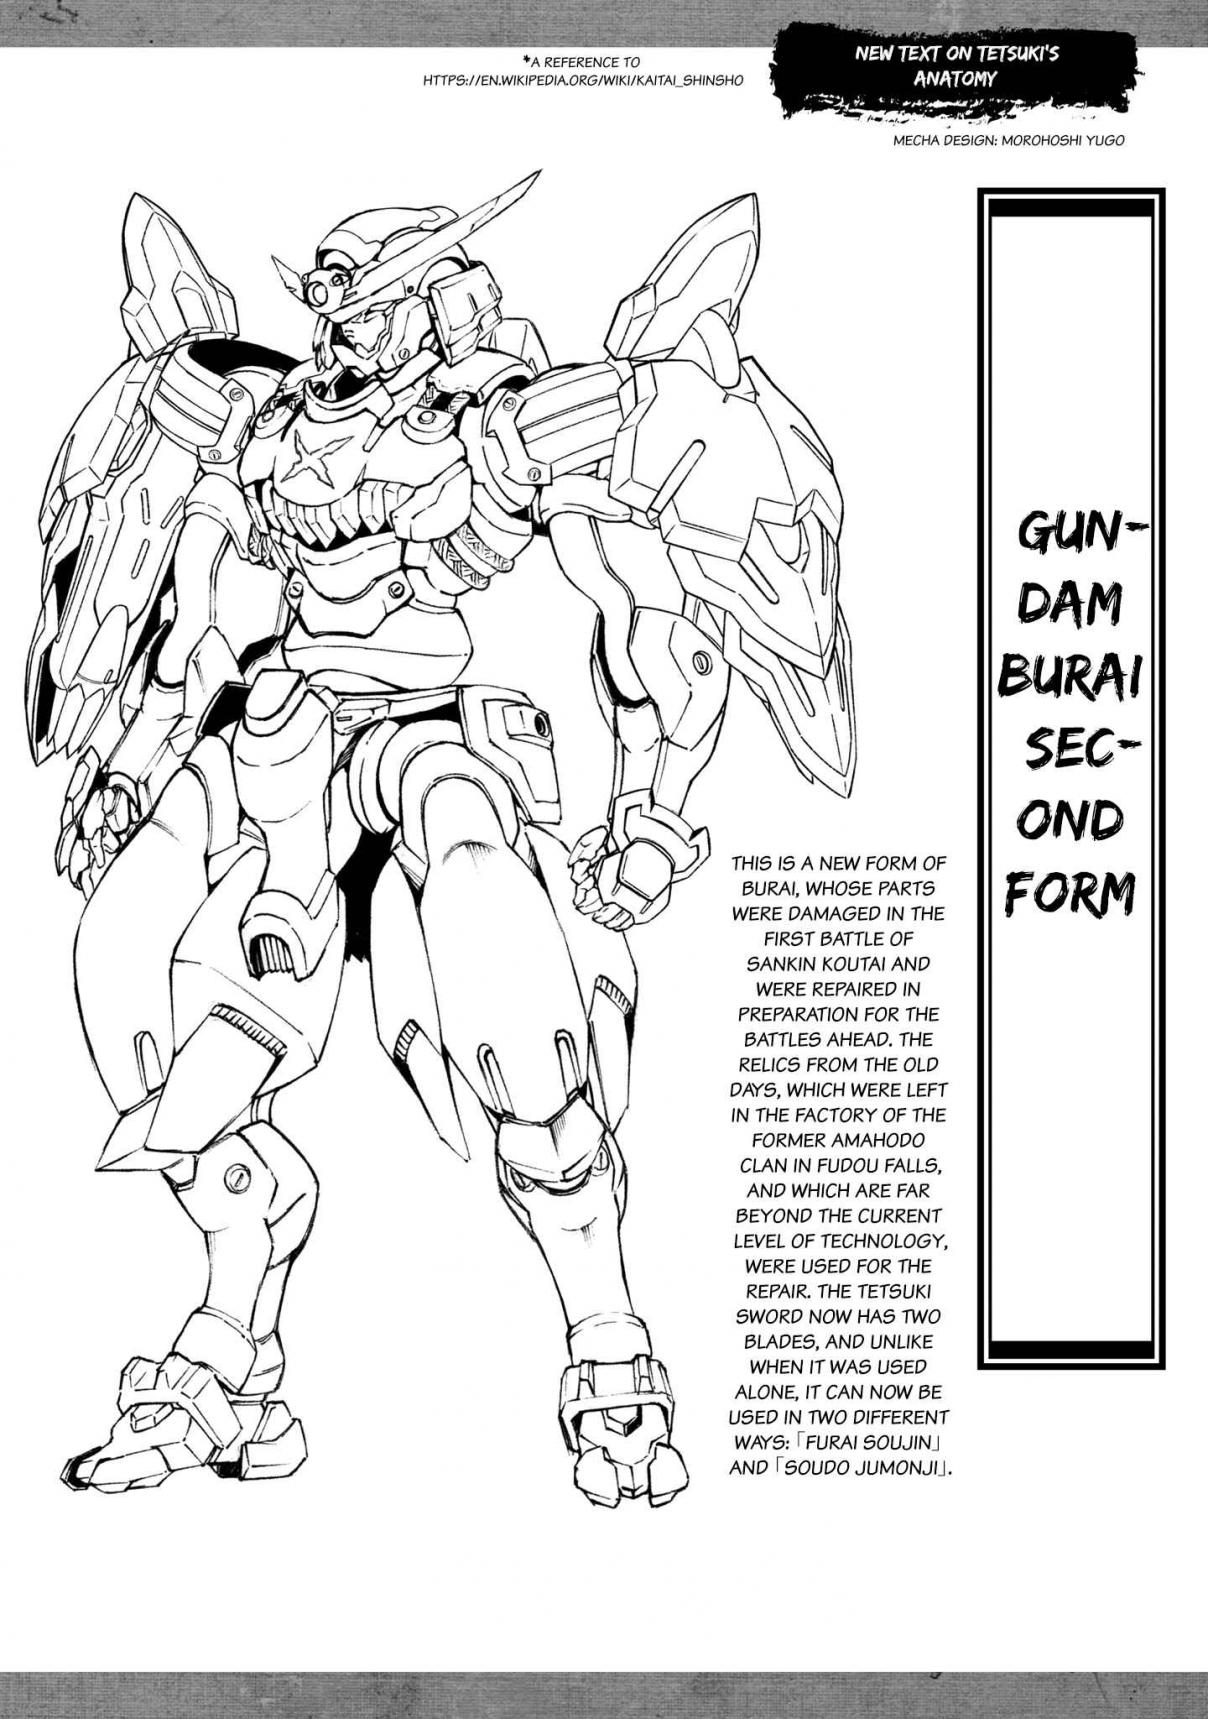 Mobile War History Gundam Burai 17.5